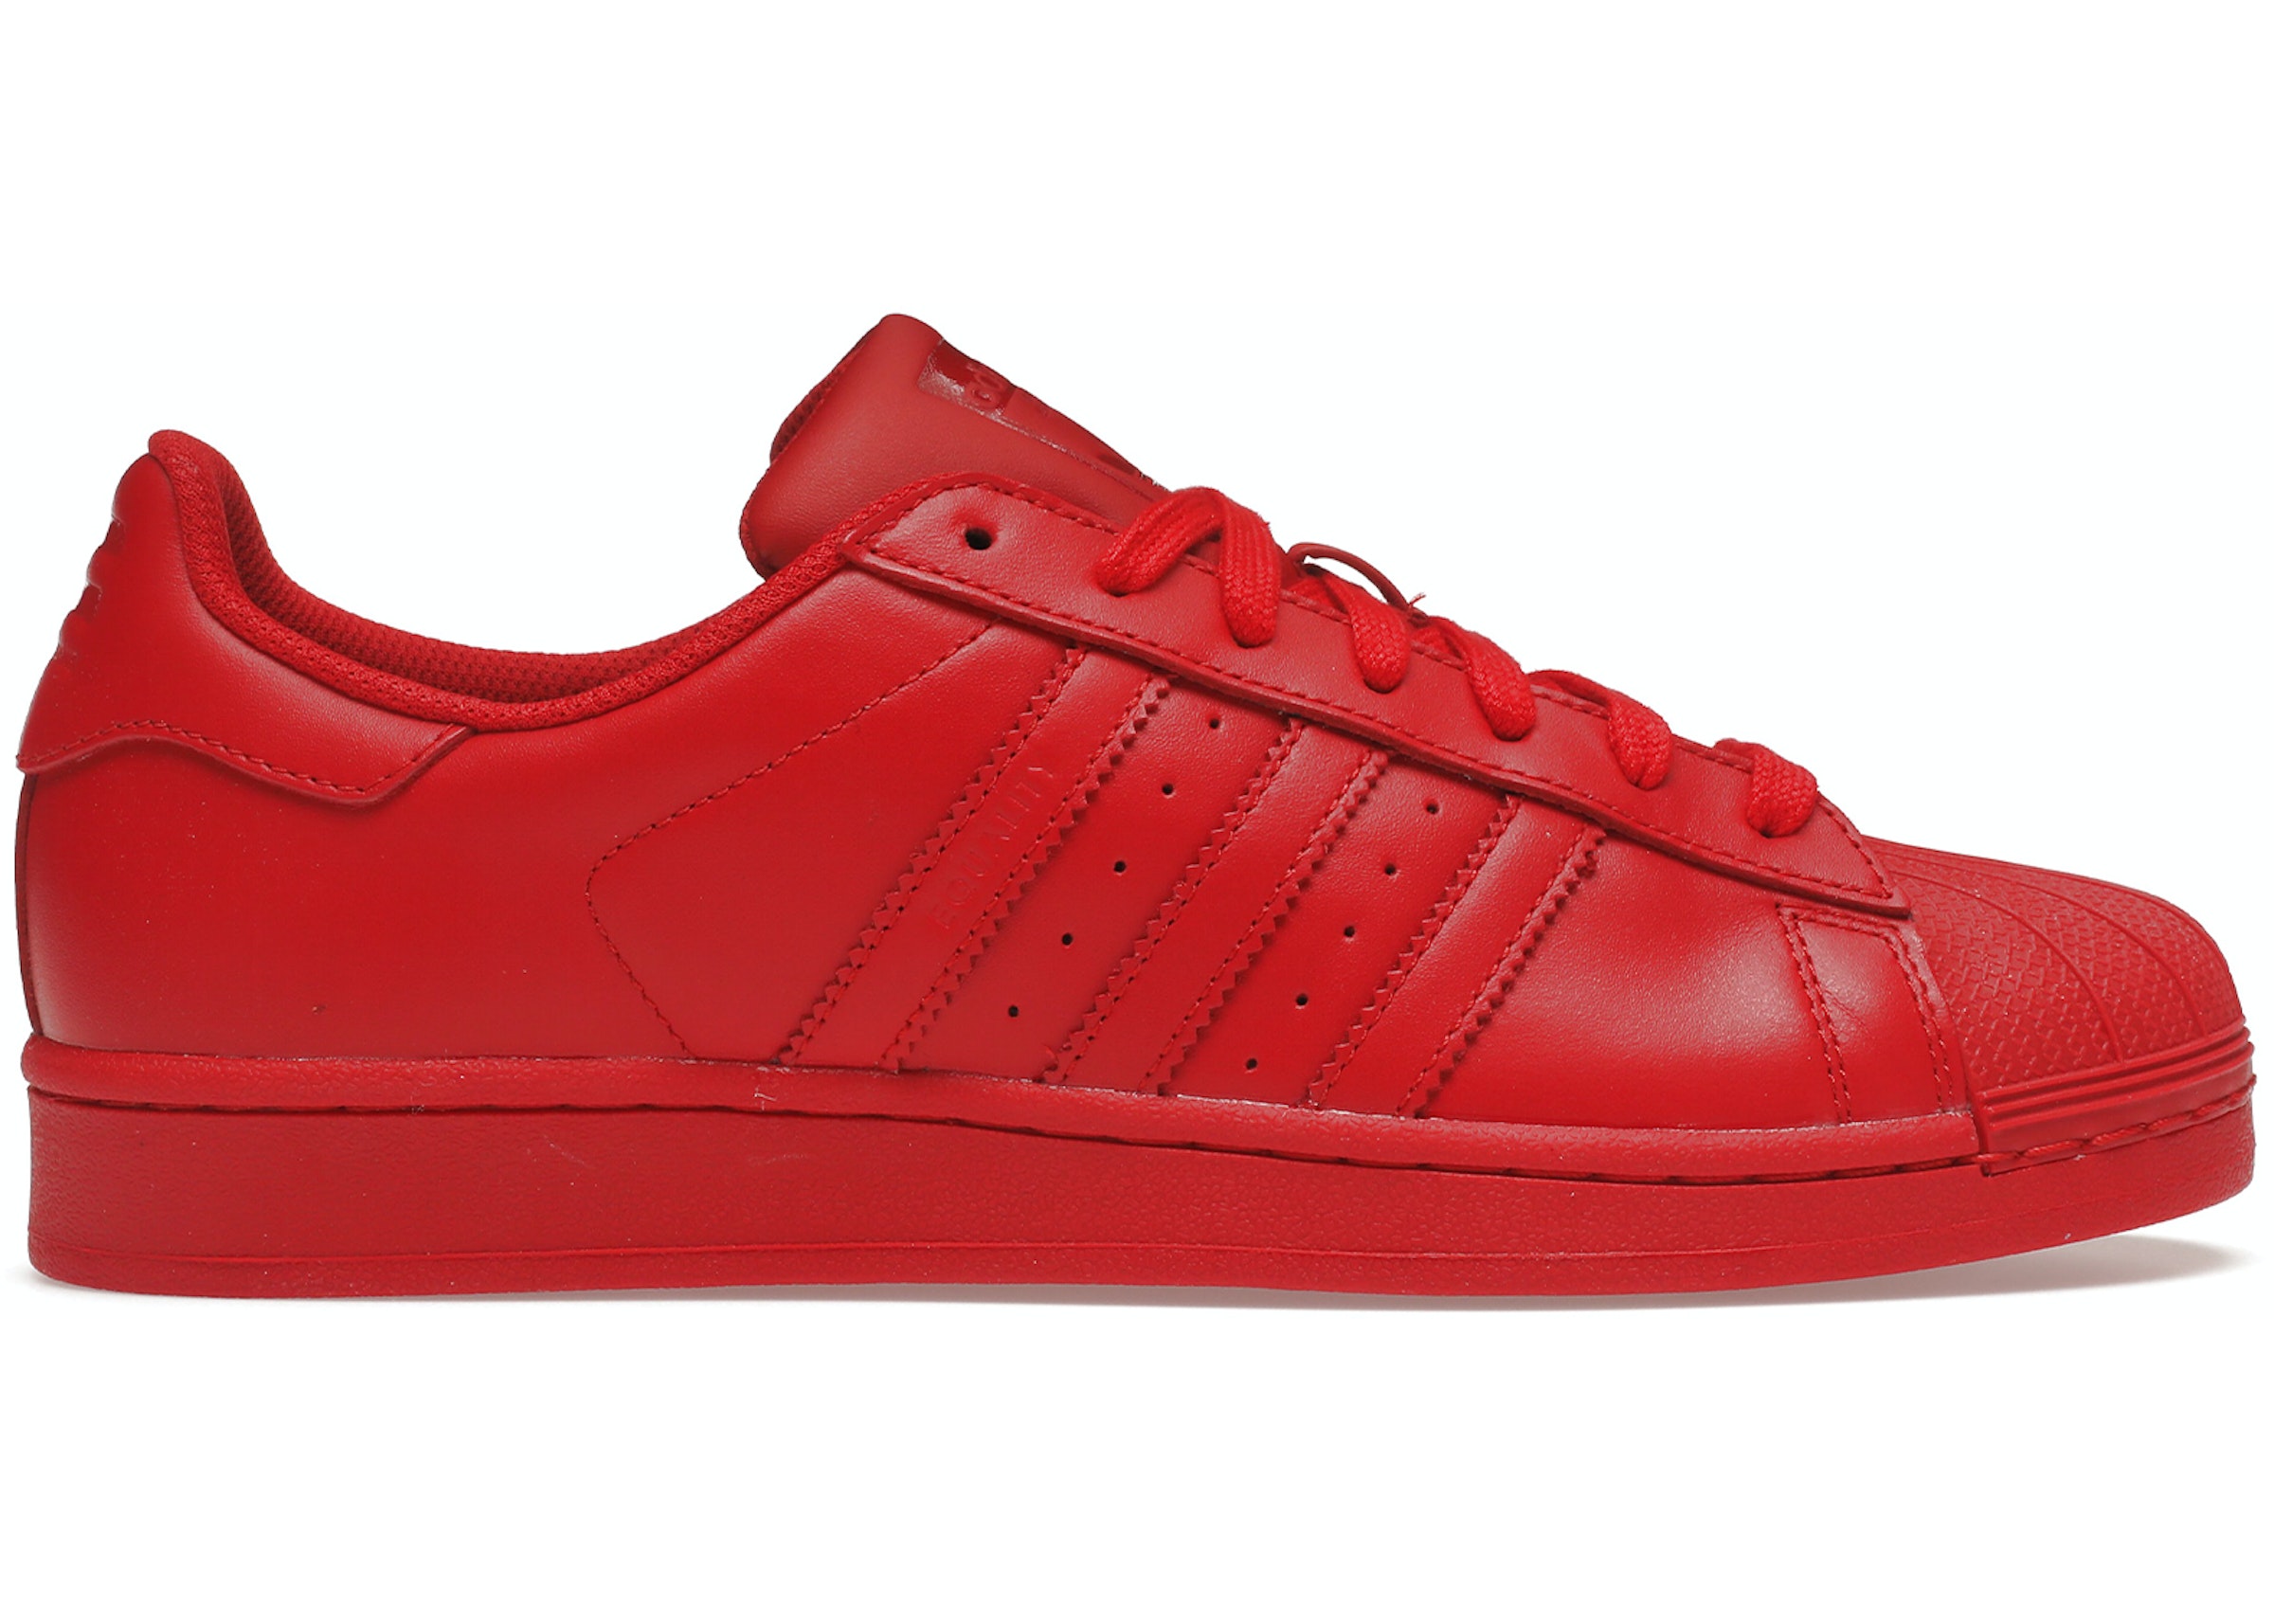 adidas Superstar Color Red Men's S41833 - US